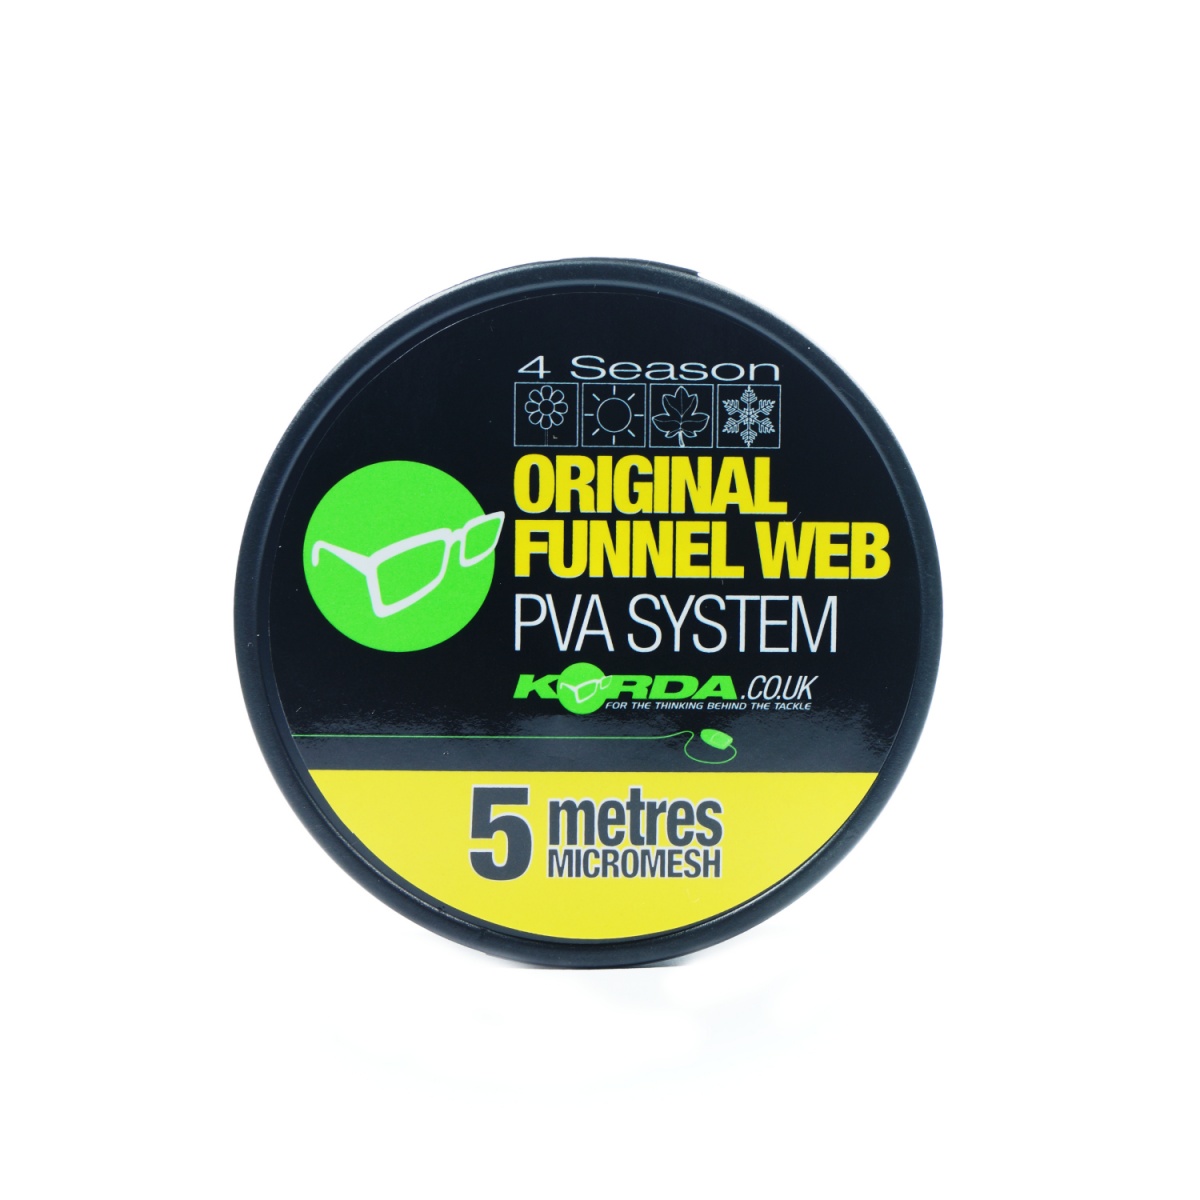 Korda Oryginal Funnel Web 4 Seasons 5m refill Micromesh rodzaj splotu